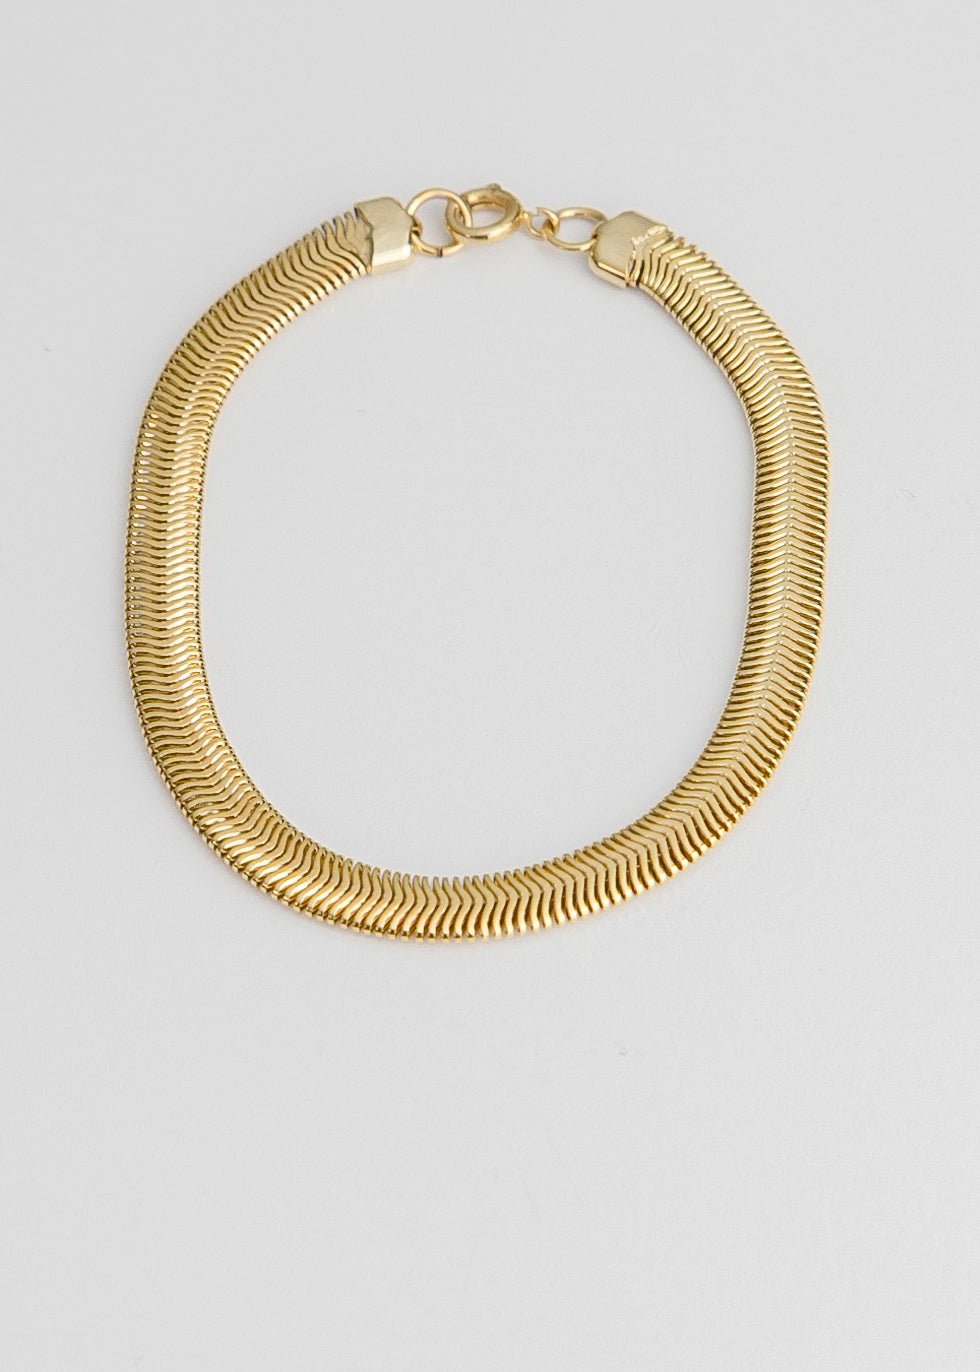 Flat Herringbone Snake Bracelet (the Hailey Bieber bracelet) - Maids to Measure